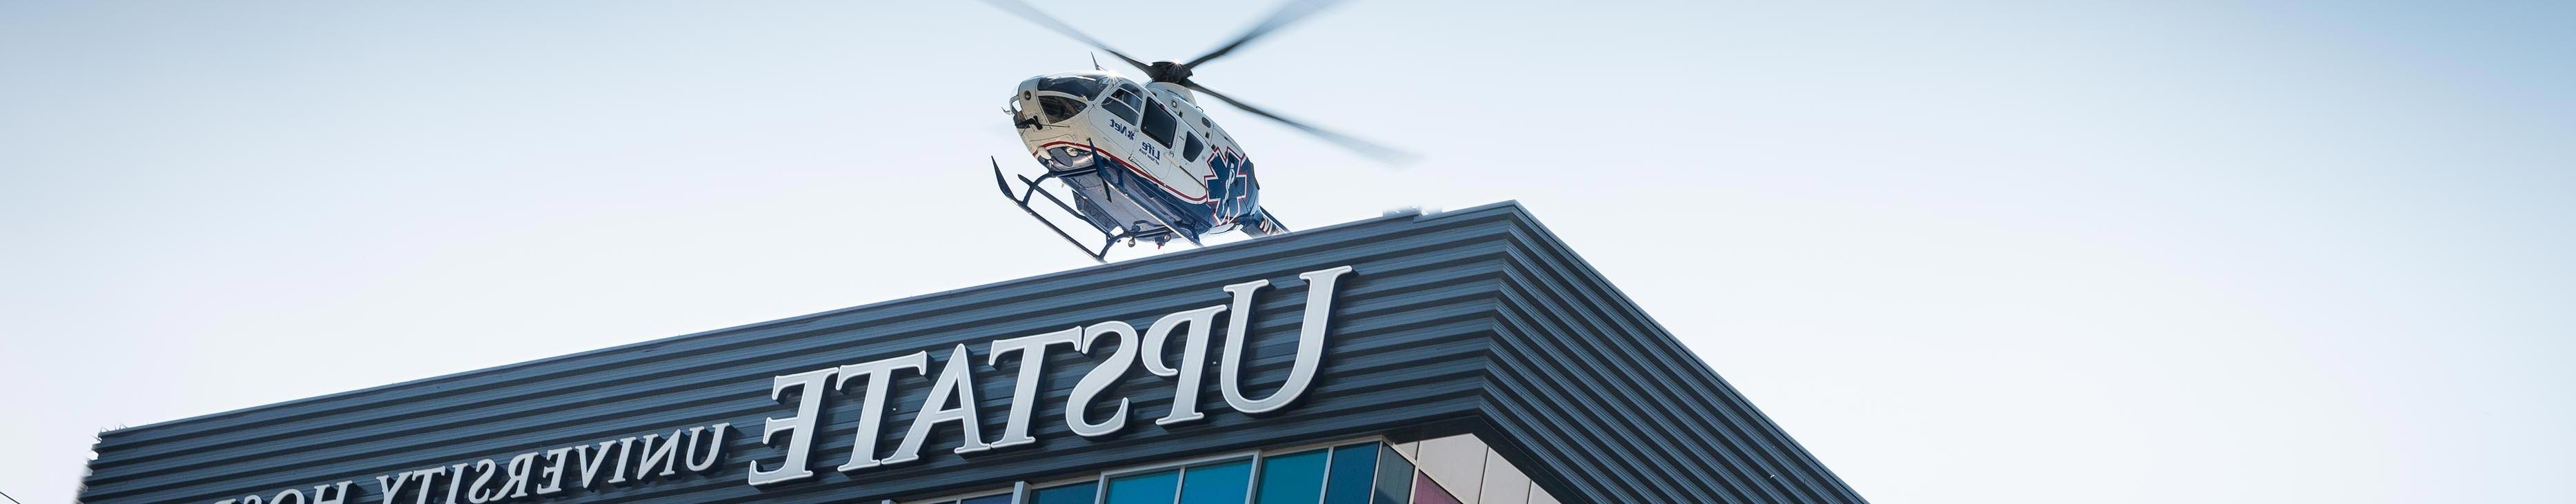 Helicopter arriving at 推荐最近最火的赌博软件 University Hospital